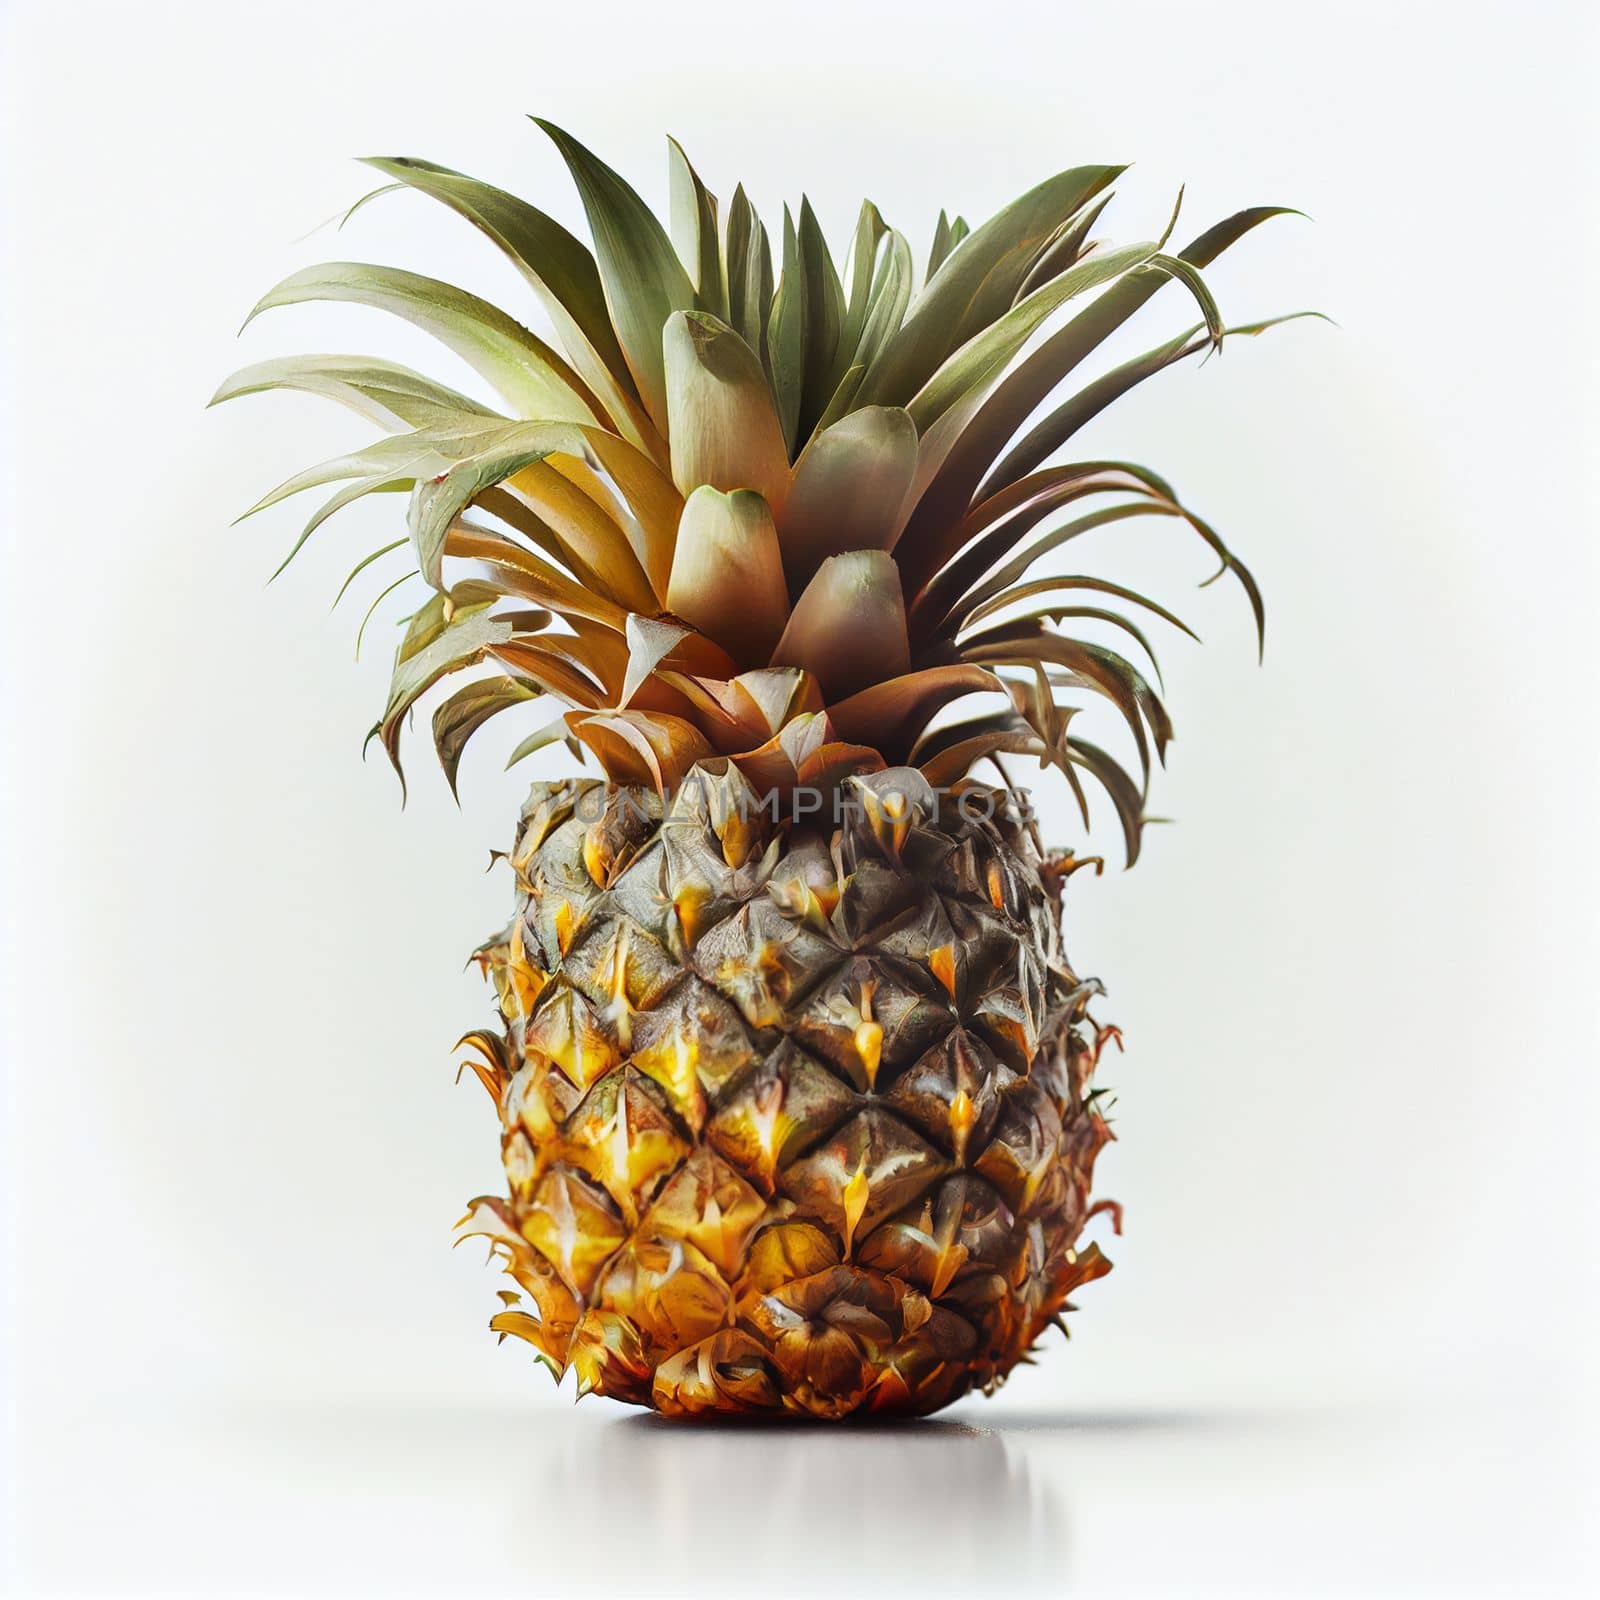 Pineapple fruit isolated on white background. by FokasuArt